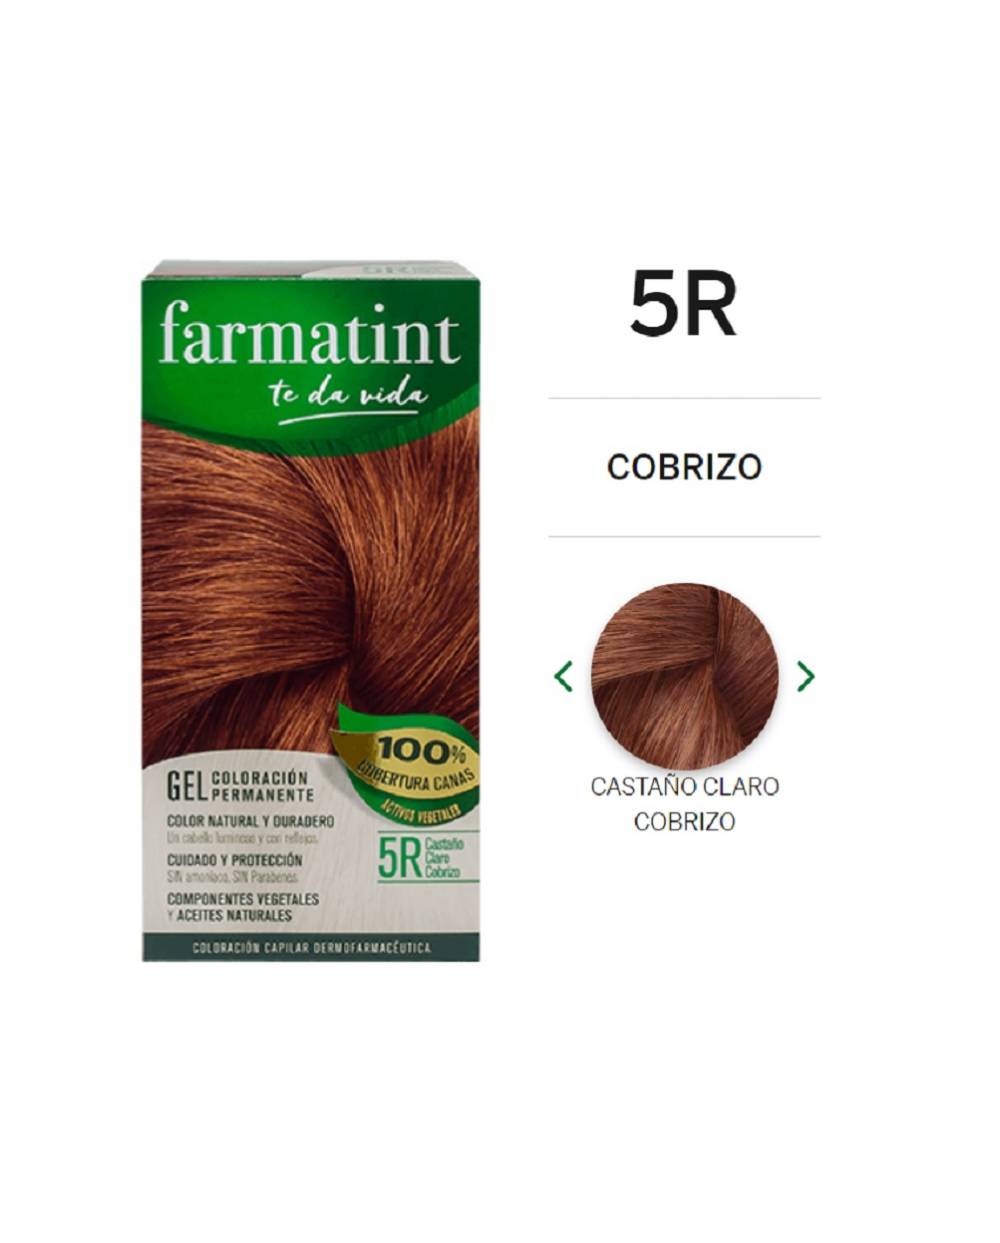 Farmatint Classic - 5R - Castaño Claro Cobrizo